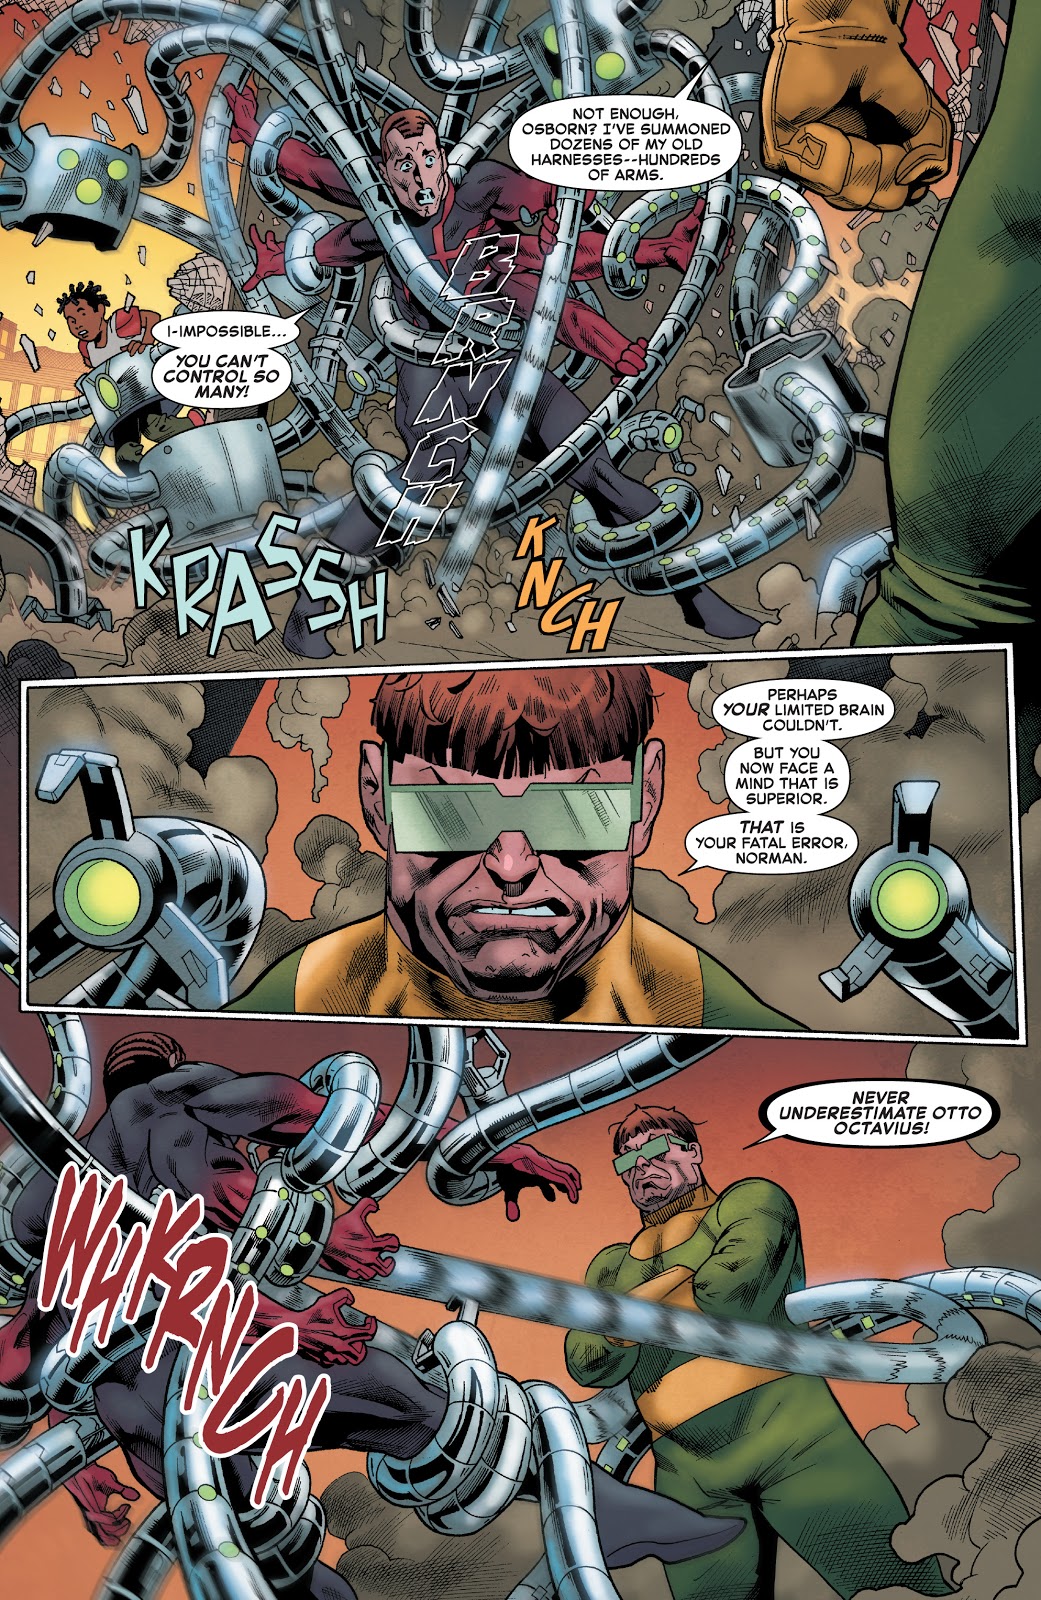 Doctor Octopus VS Spider-Man (Norman Osborn) 